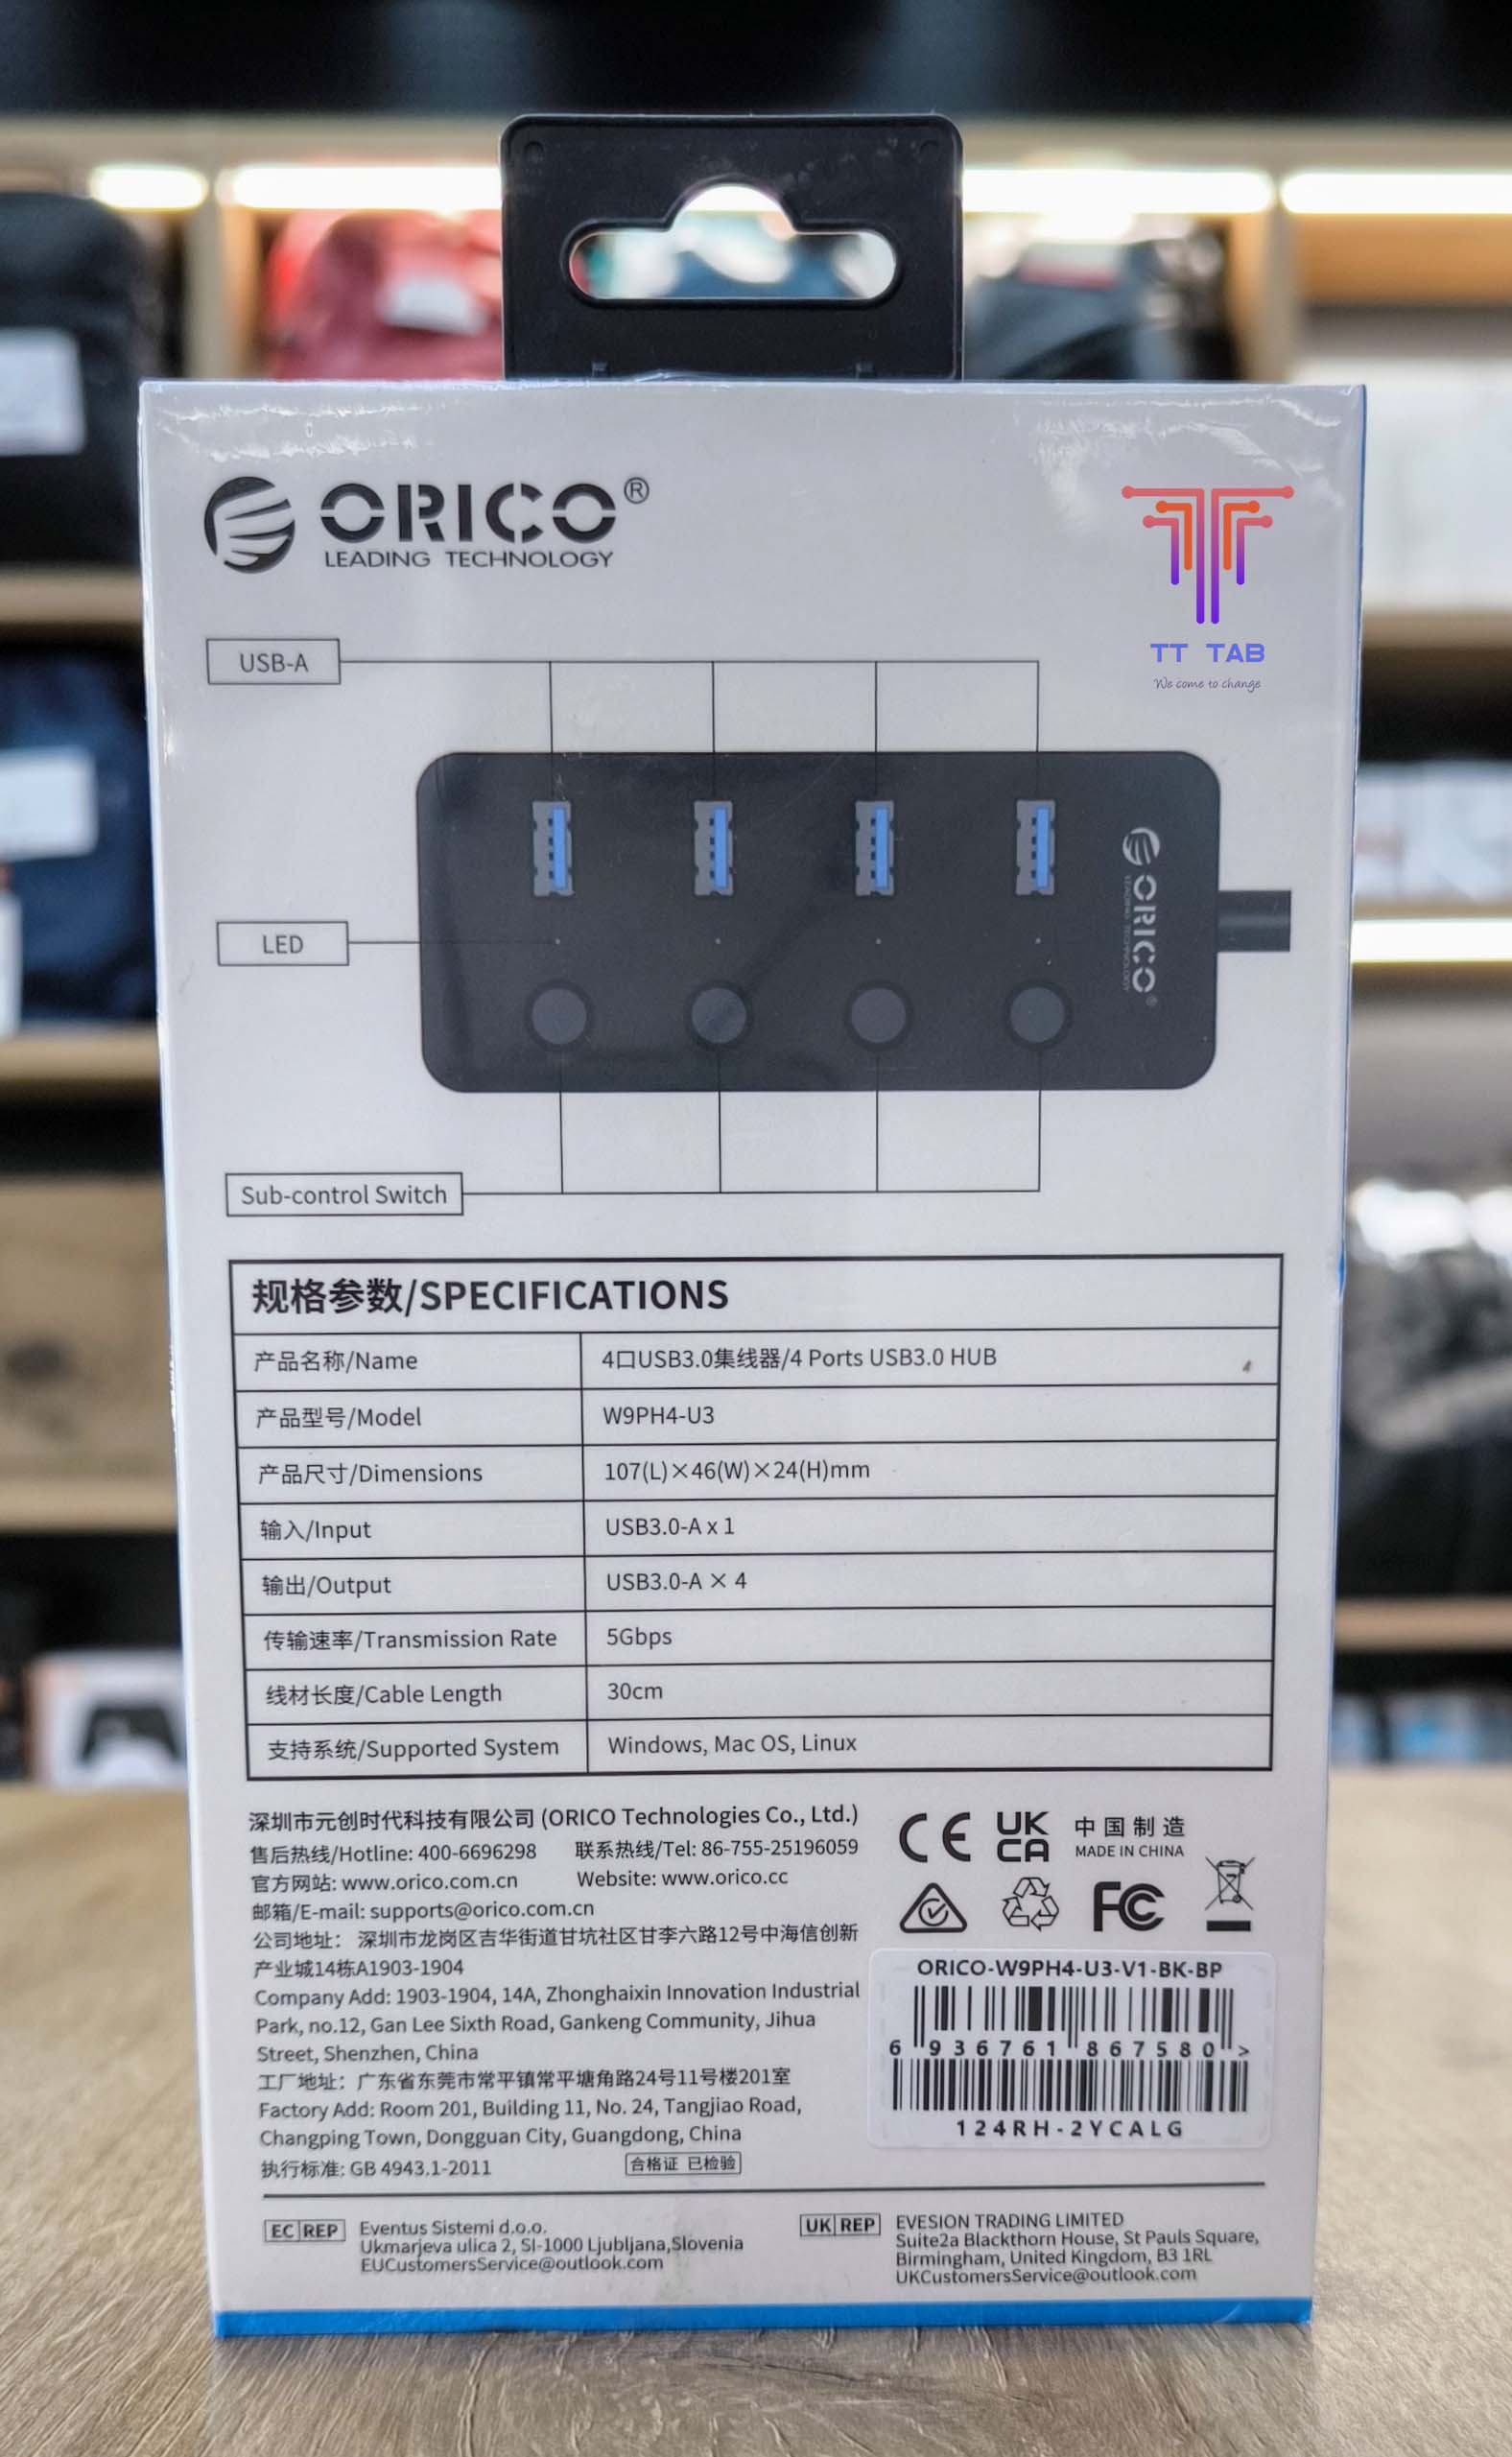 Orico W9PH4-U3-V1 USB HUB with Individual On/Off Switches